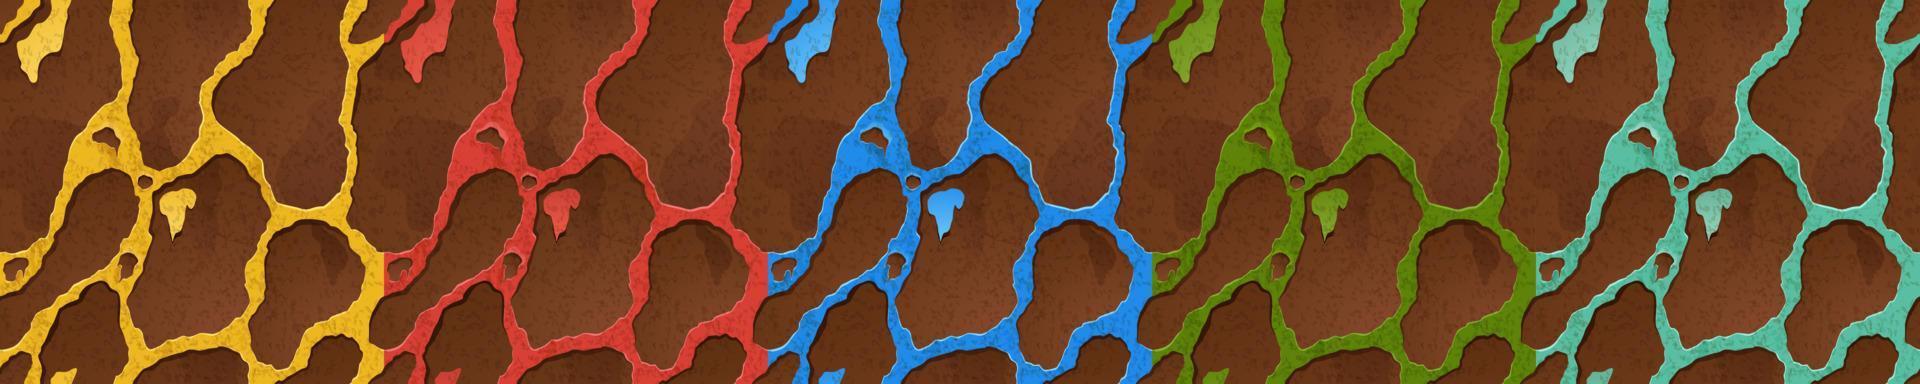 textura de metal oxidado con agujeros, diseño de juego de óxido vector